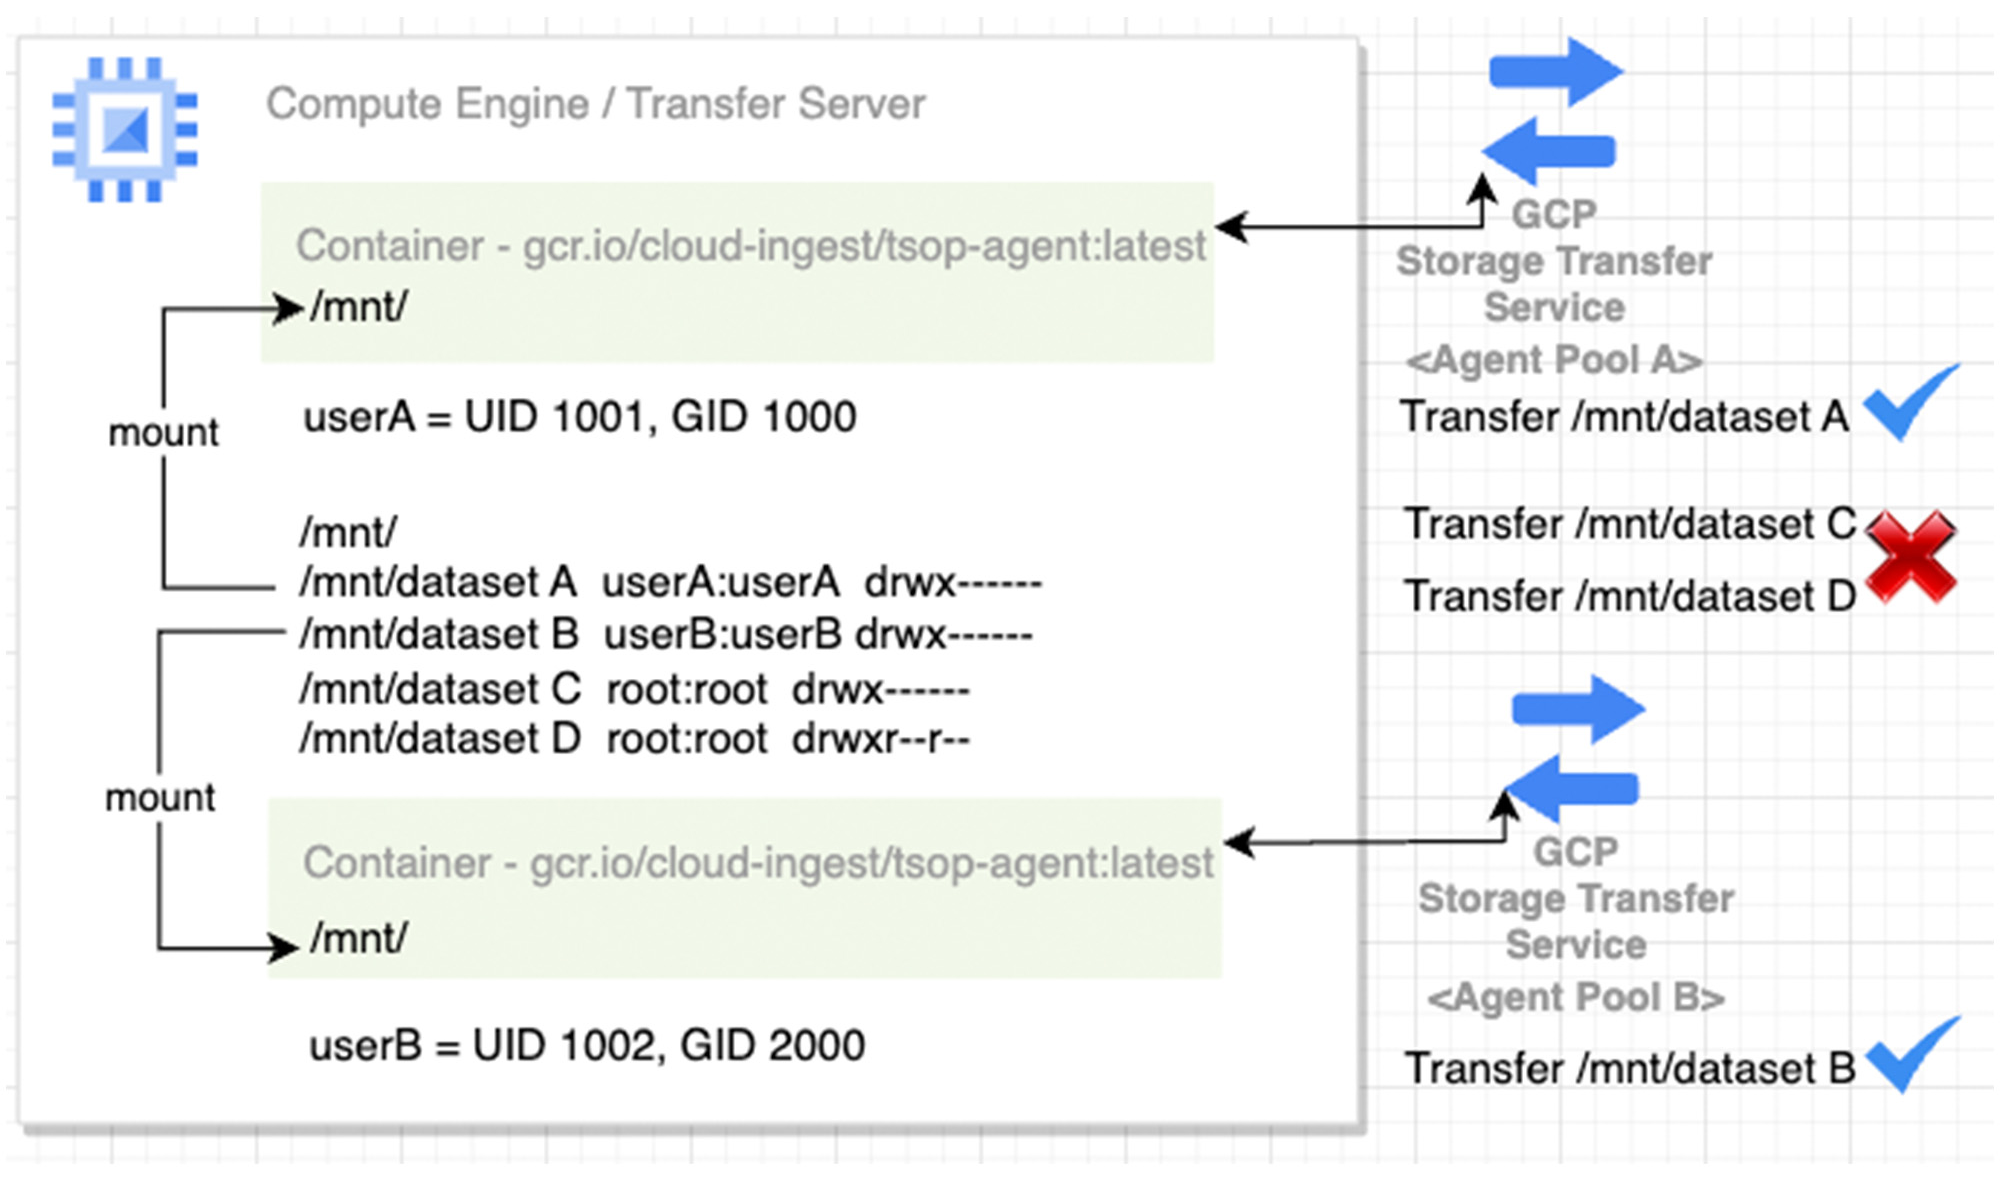 https://storage.googleapis.com/gweb-cloudblog-publish/images/2_Storage_Transfer_Servic.1000064720001180.max-2000x2000.jpg